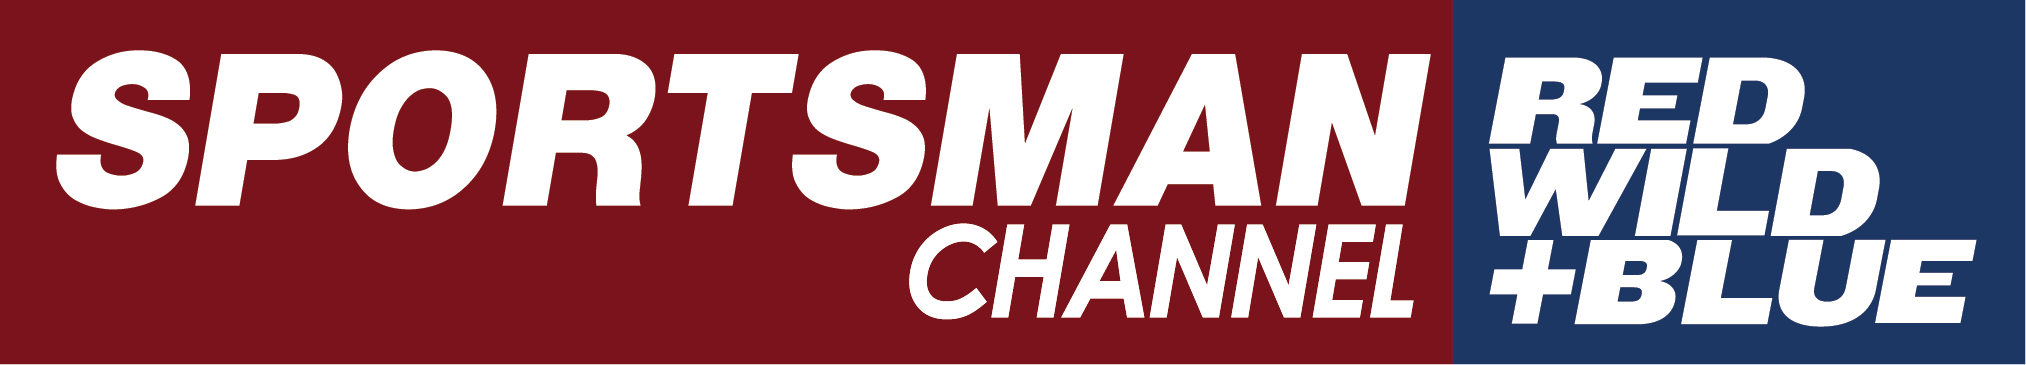 Sportsmans Channel logo